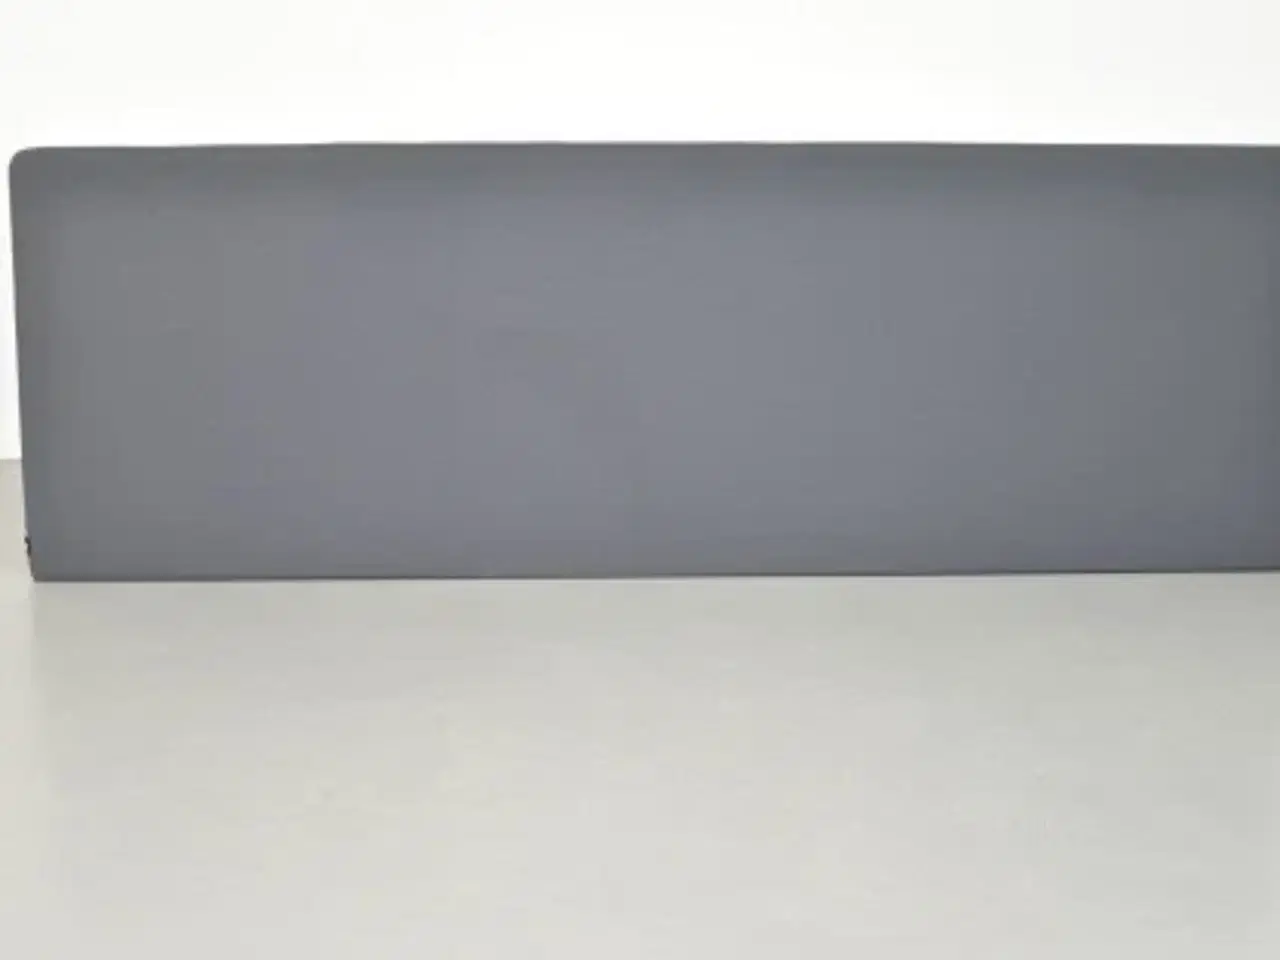 Billede 1 - Efg bordskærm i grå, 181 cm.